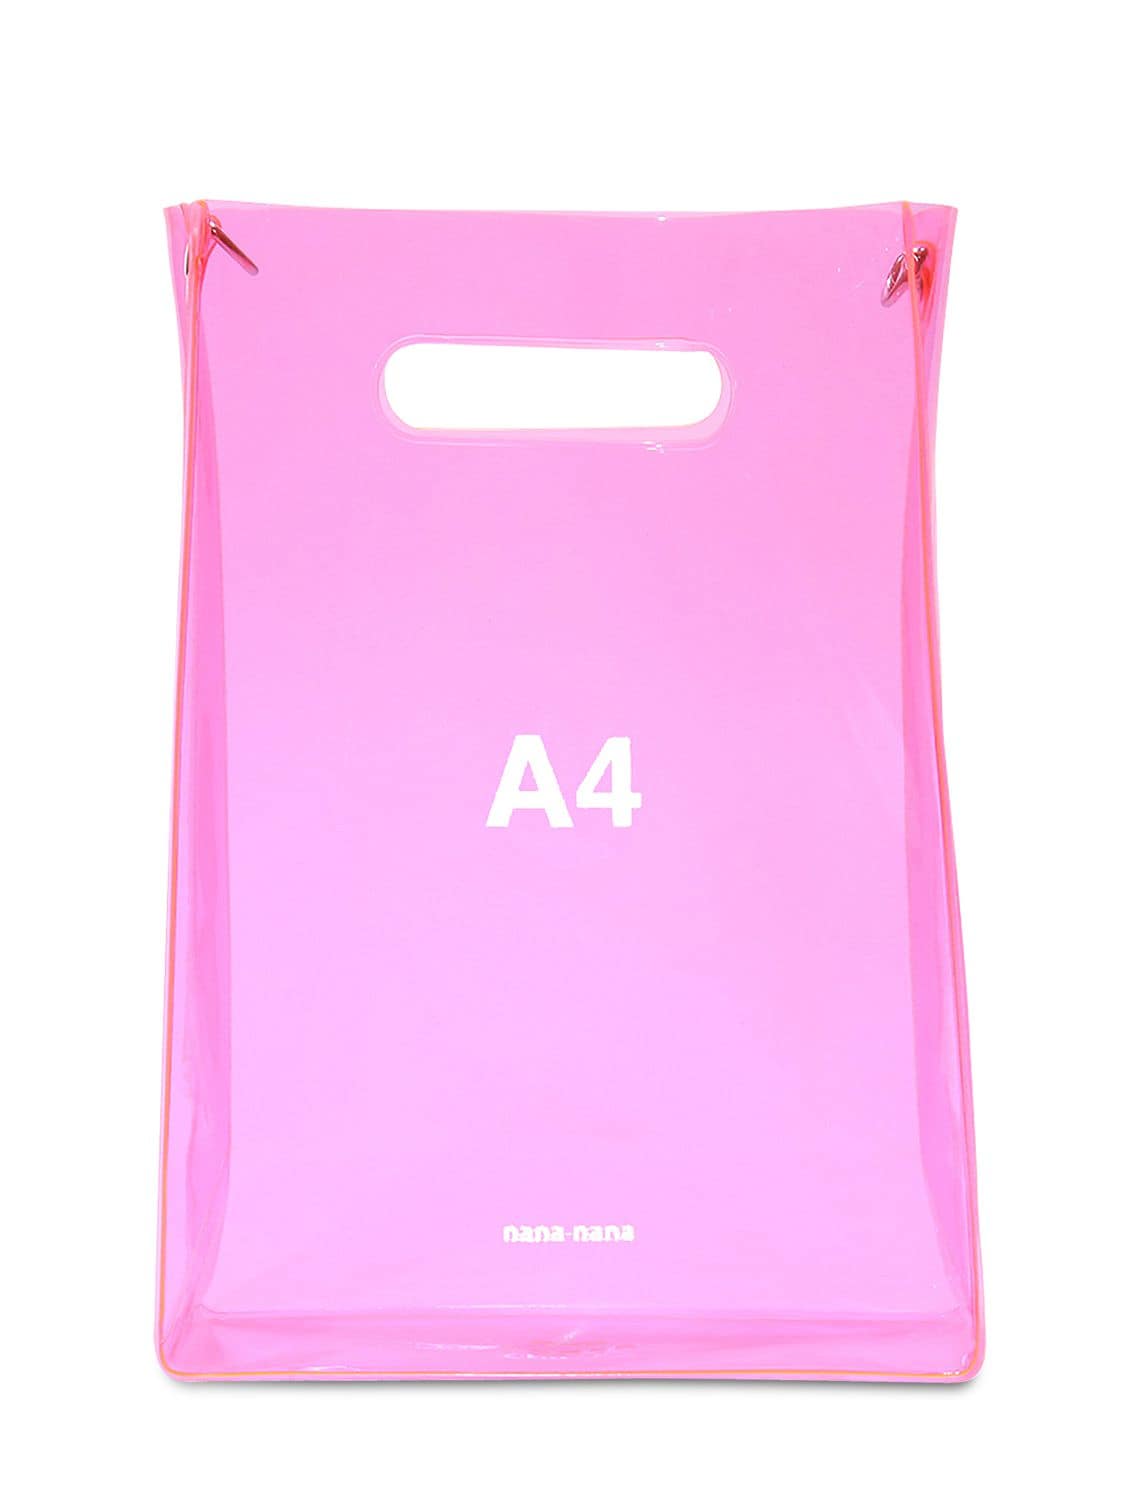 Nana-nana A4 Pvc Shopping Bag In Neon Pink